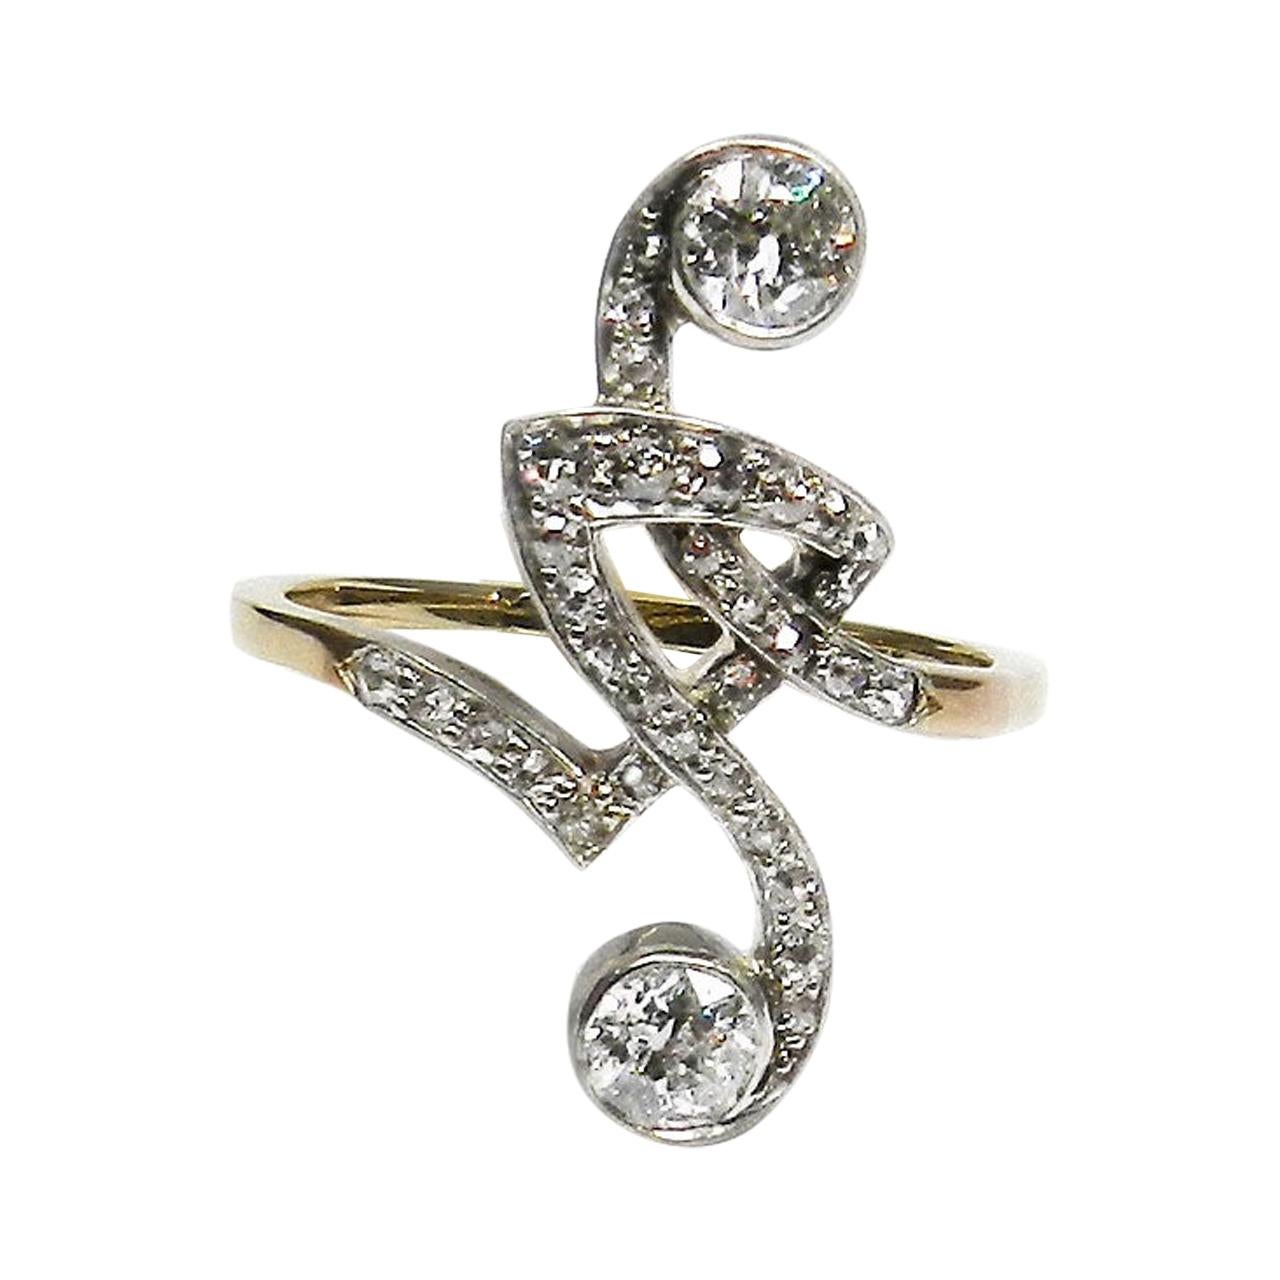 Art Nouveau 1.12 Carat Diamond Ring “Toi et Moi”, circa 1910